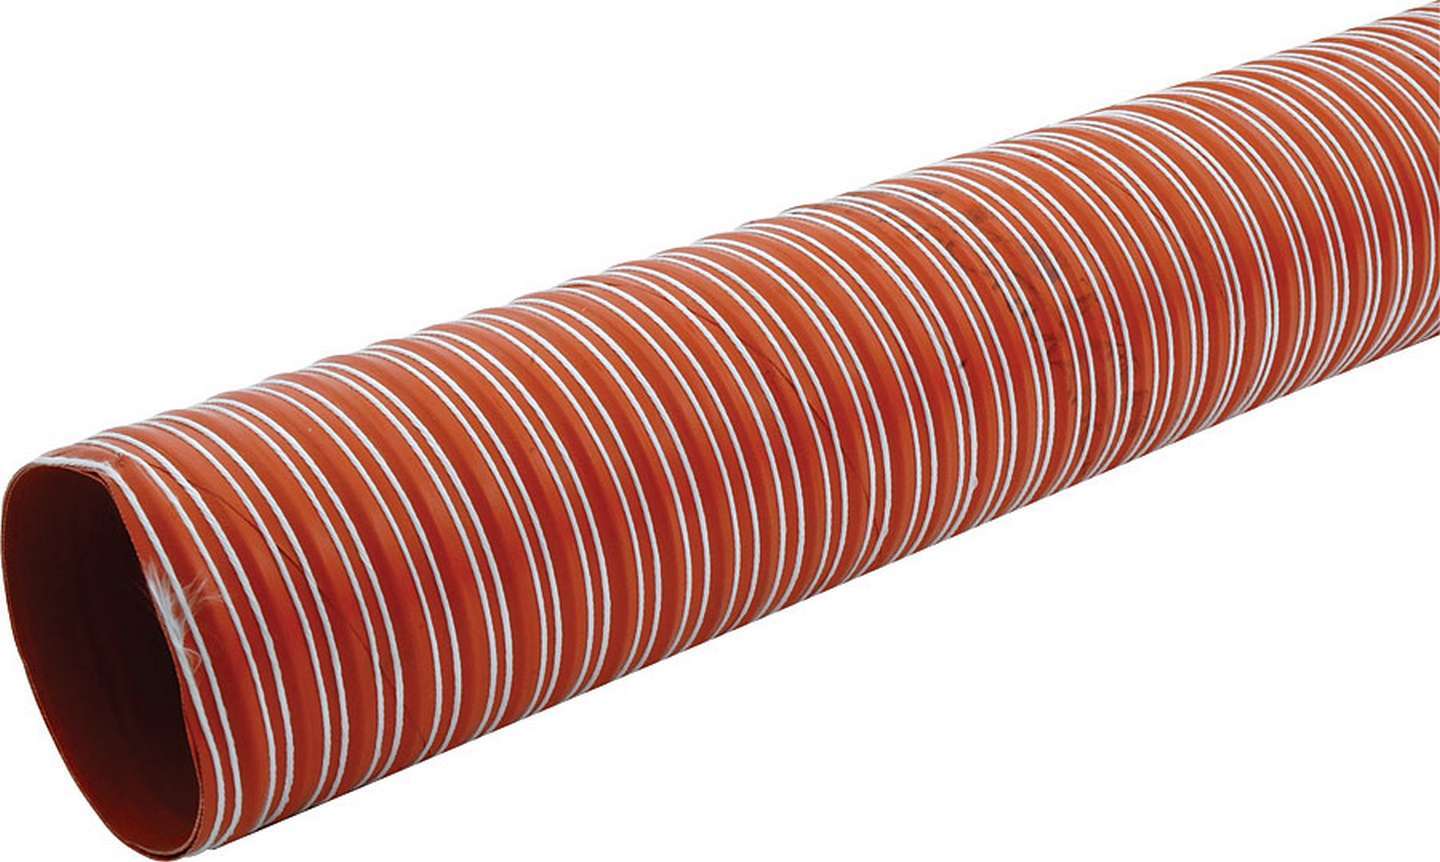 Air or Brake Duct Hose - 3 in Diameter - 10 ft - Silicone Rubber Coated Fiberglass Fabric - Orange - Each